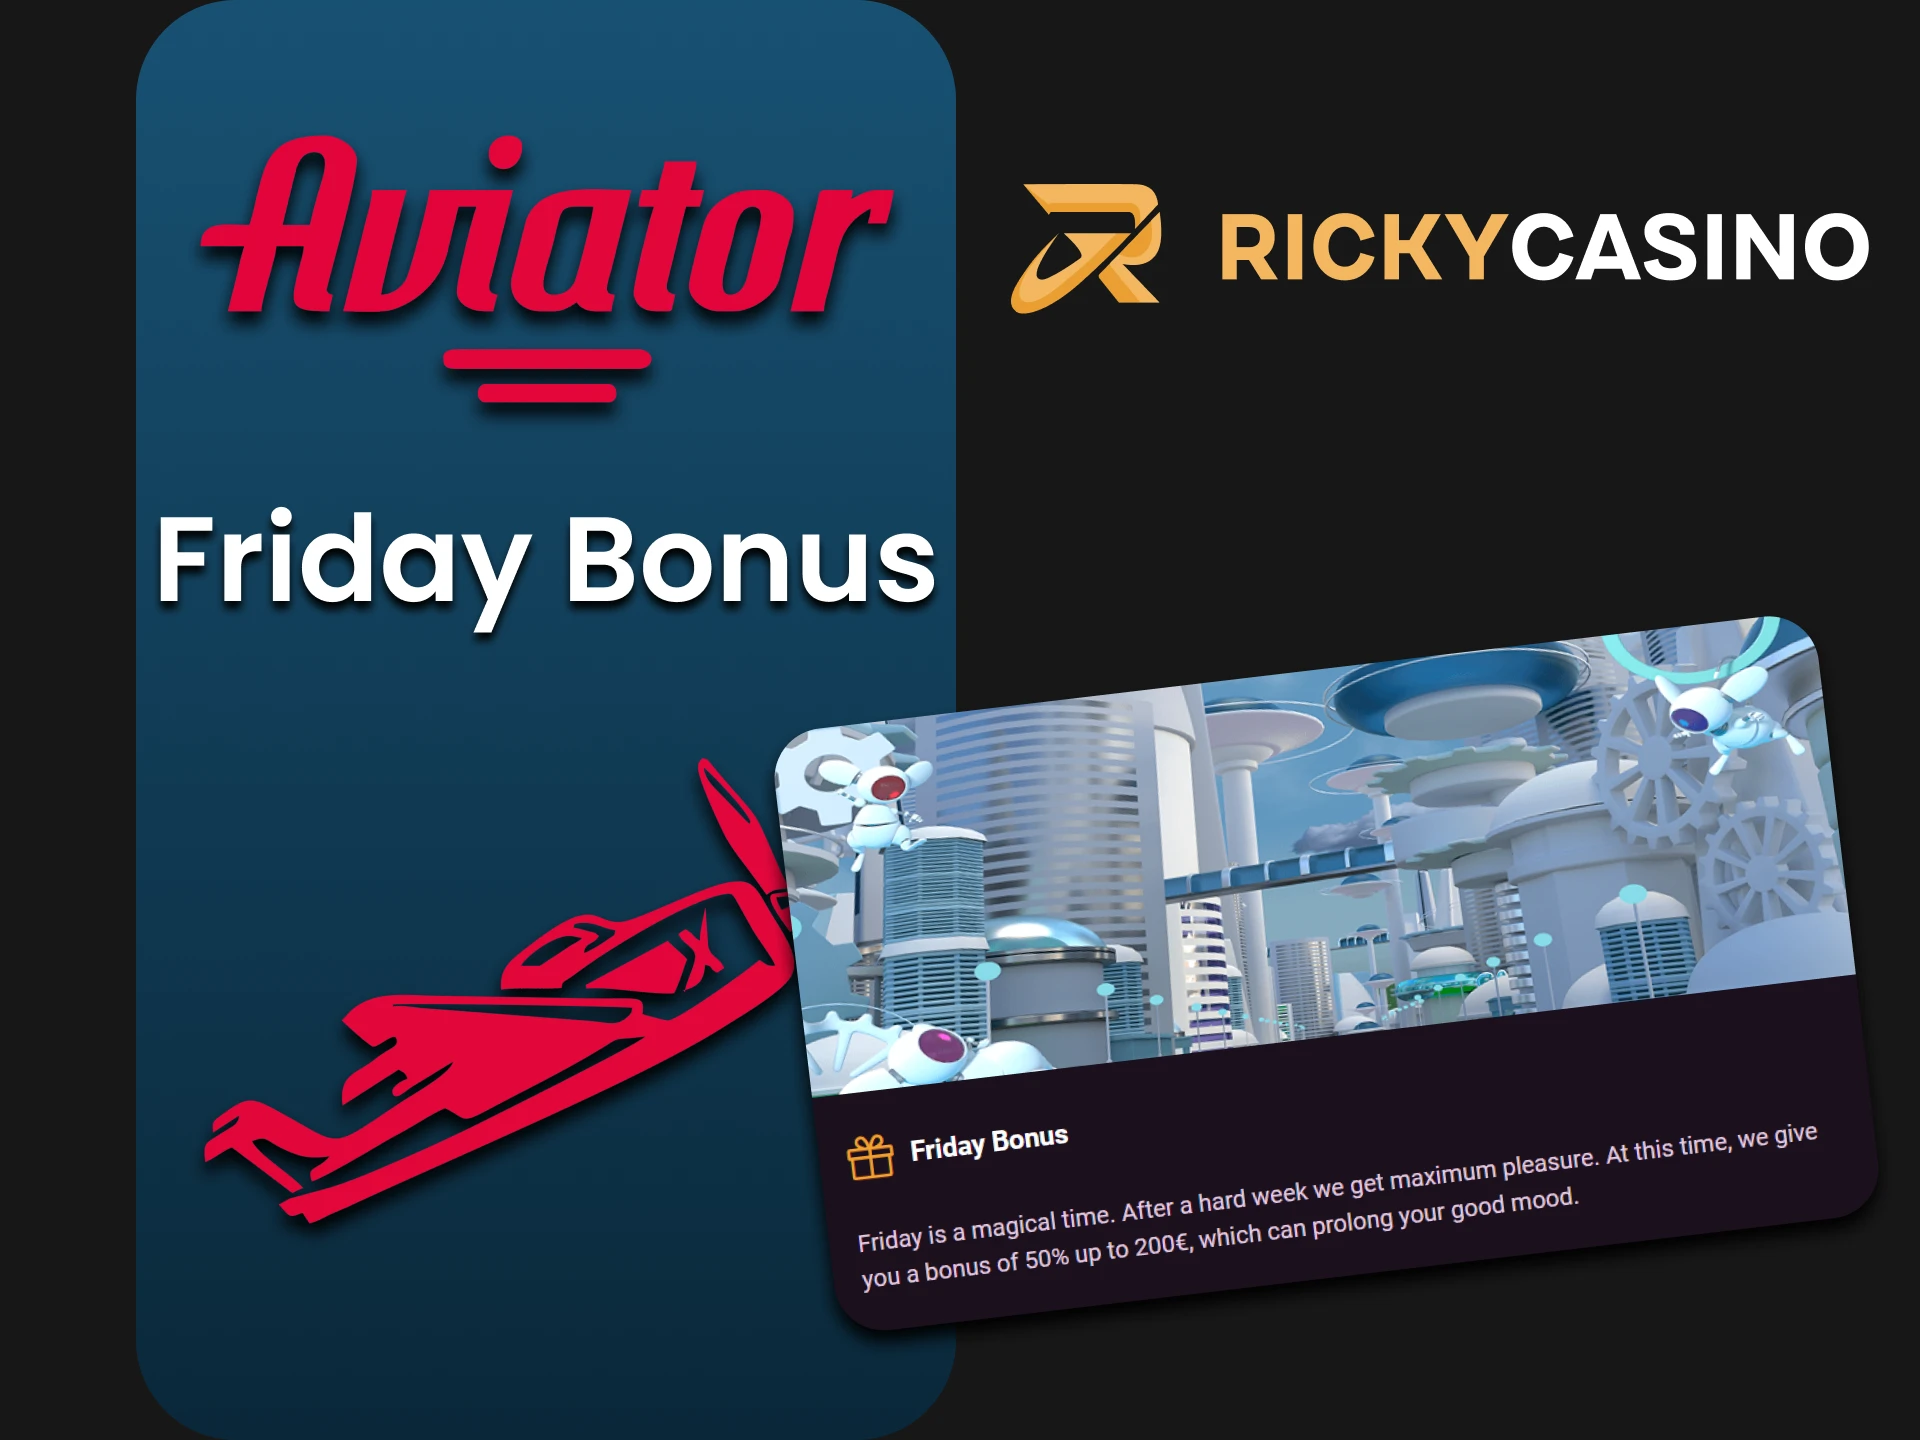 Ricky Casino gives bonuses to Aviator players on Fridays.